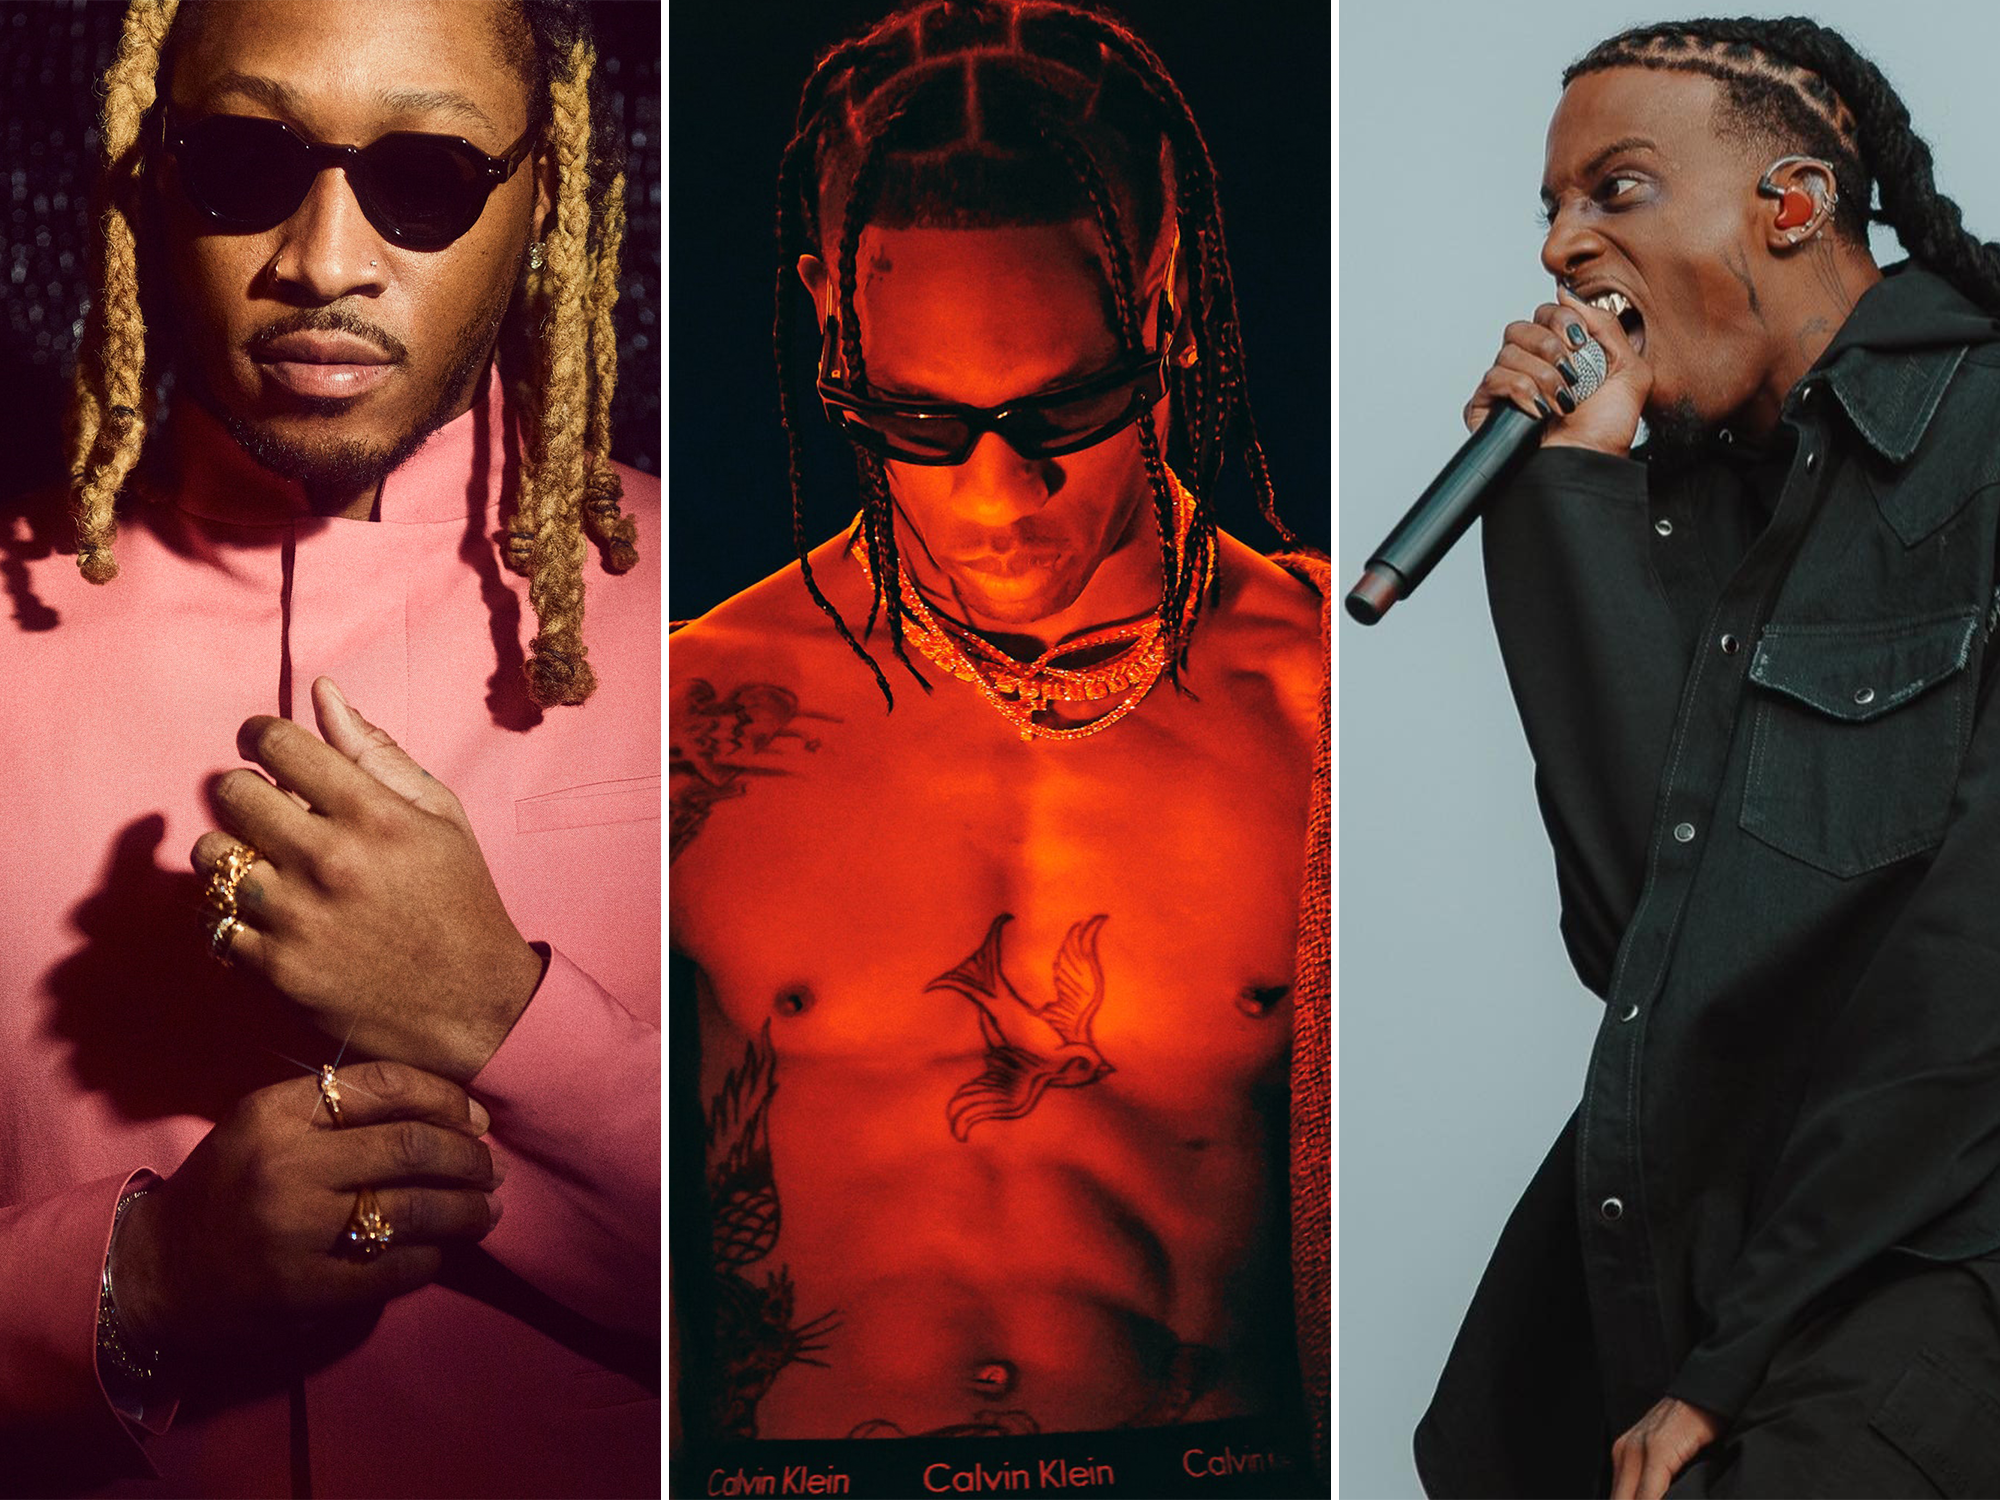 Playboi Carti, Lil Wayne, Travis Scott Lead Rolling Loud